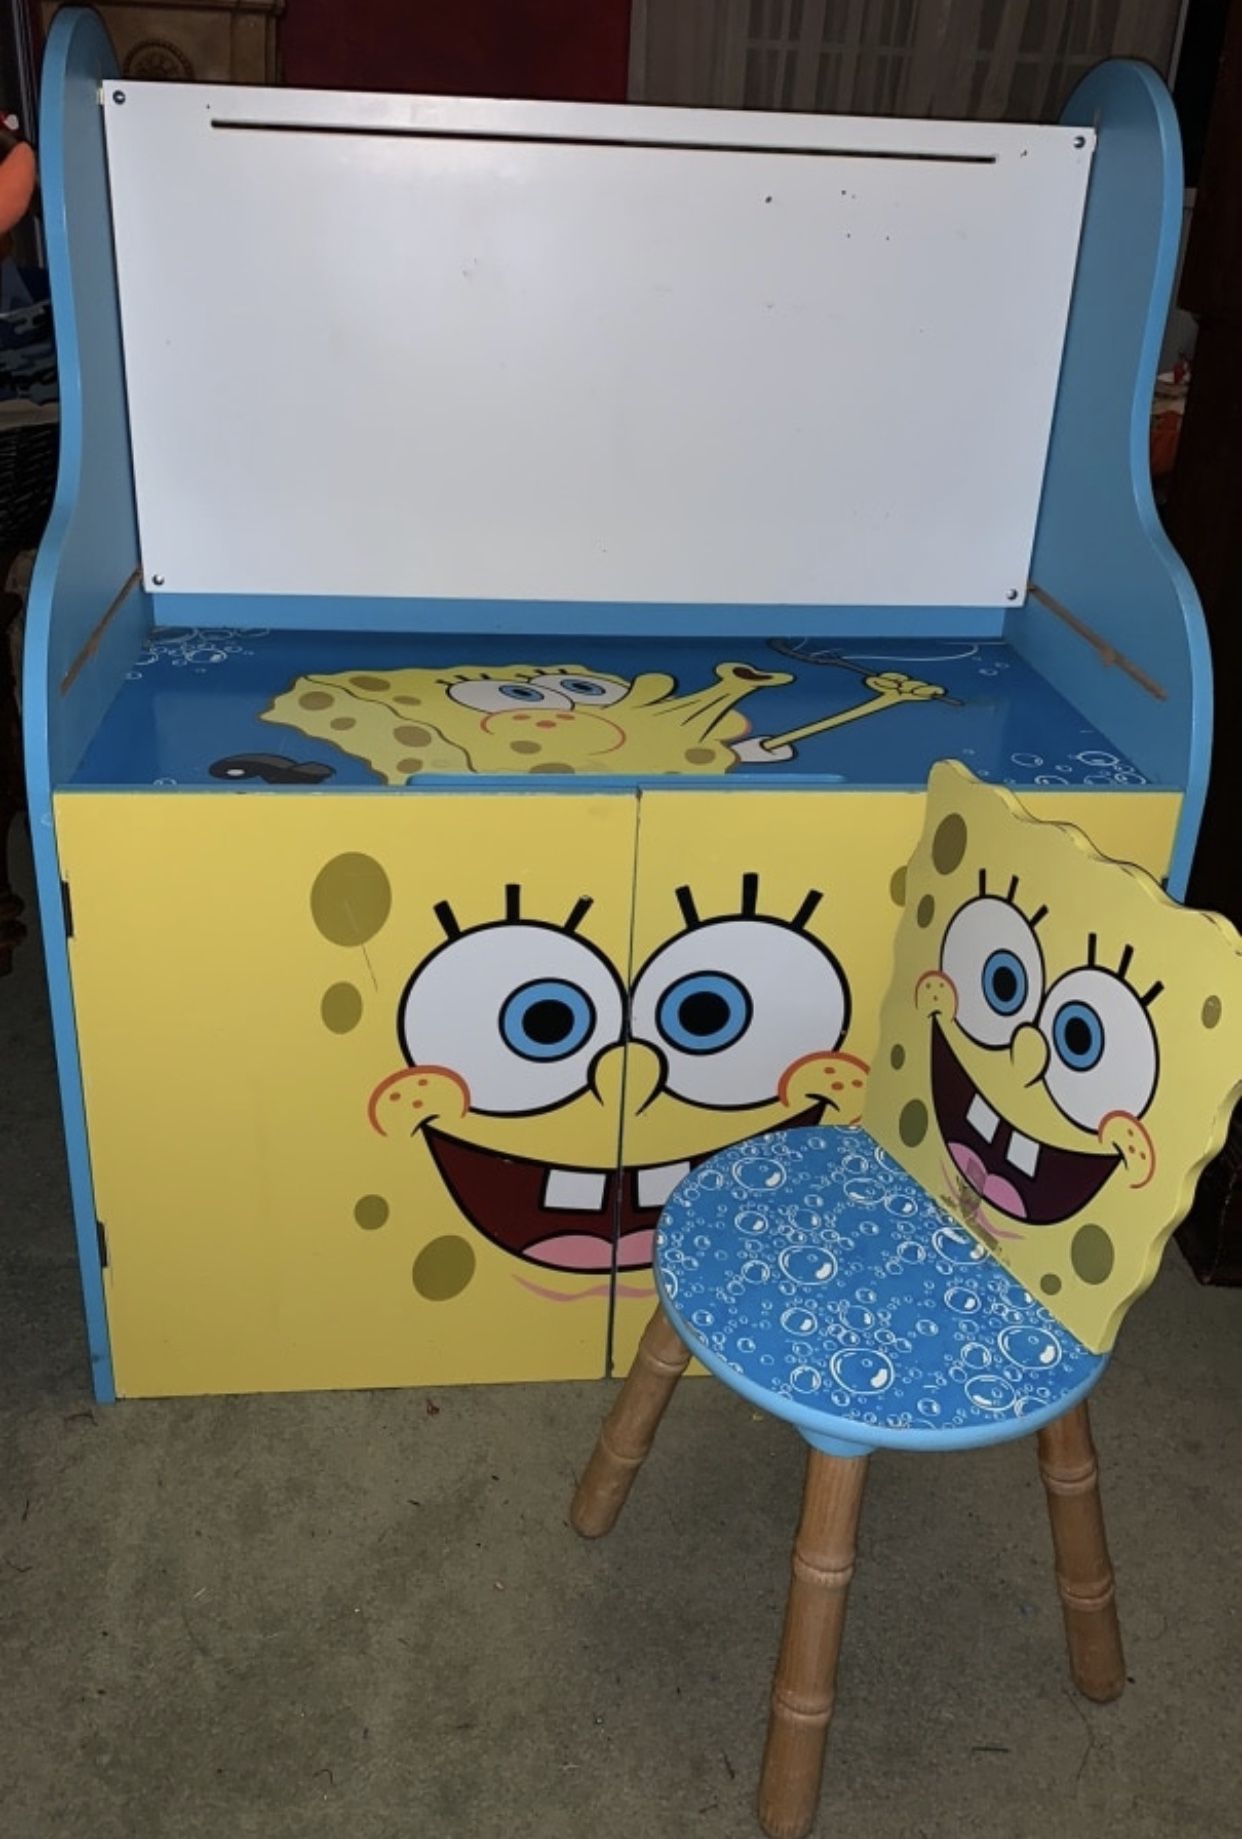 Young Kids spongebob squarepants school work / art desk table and chair